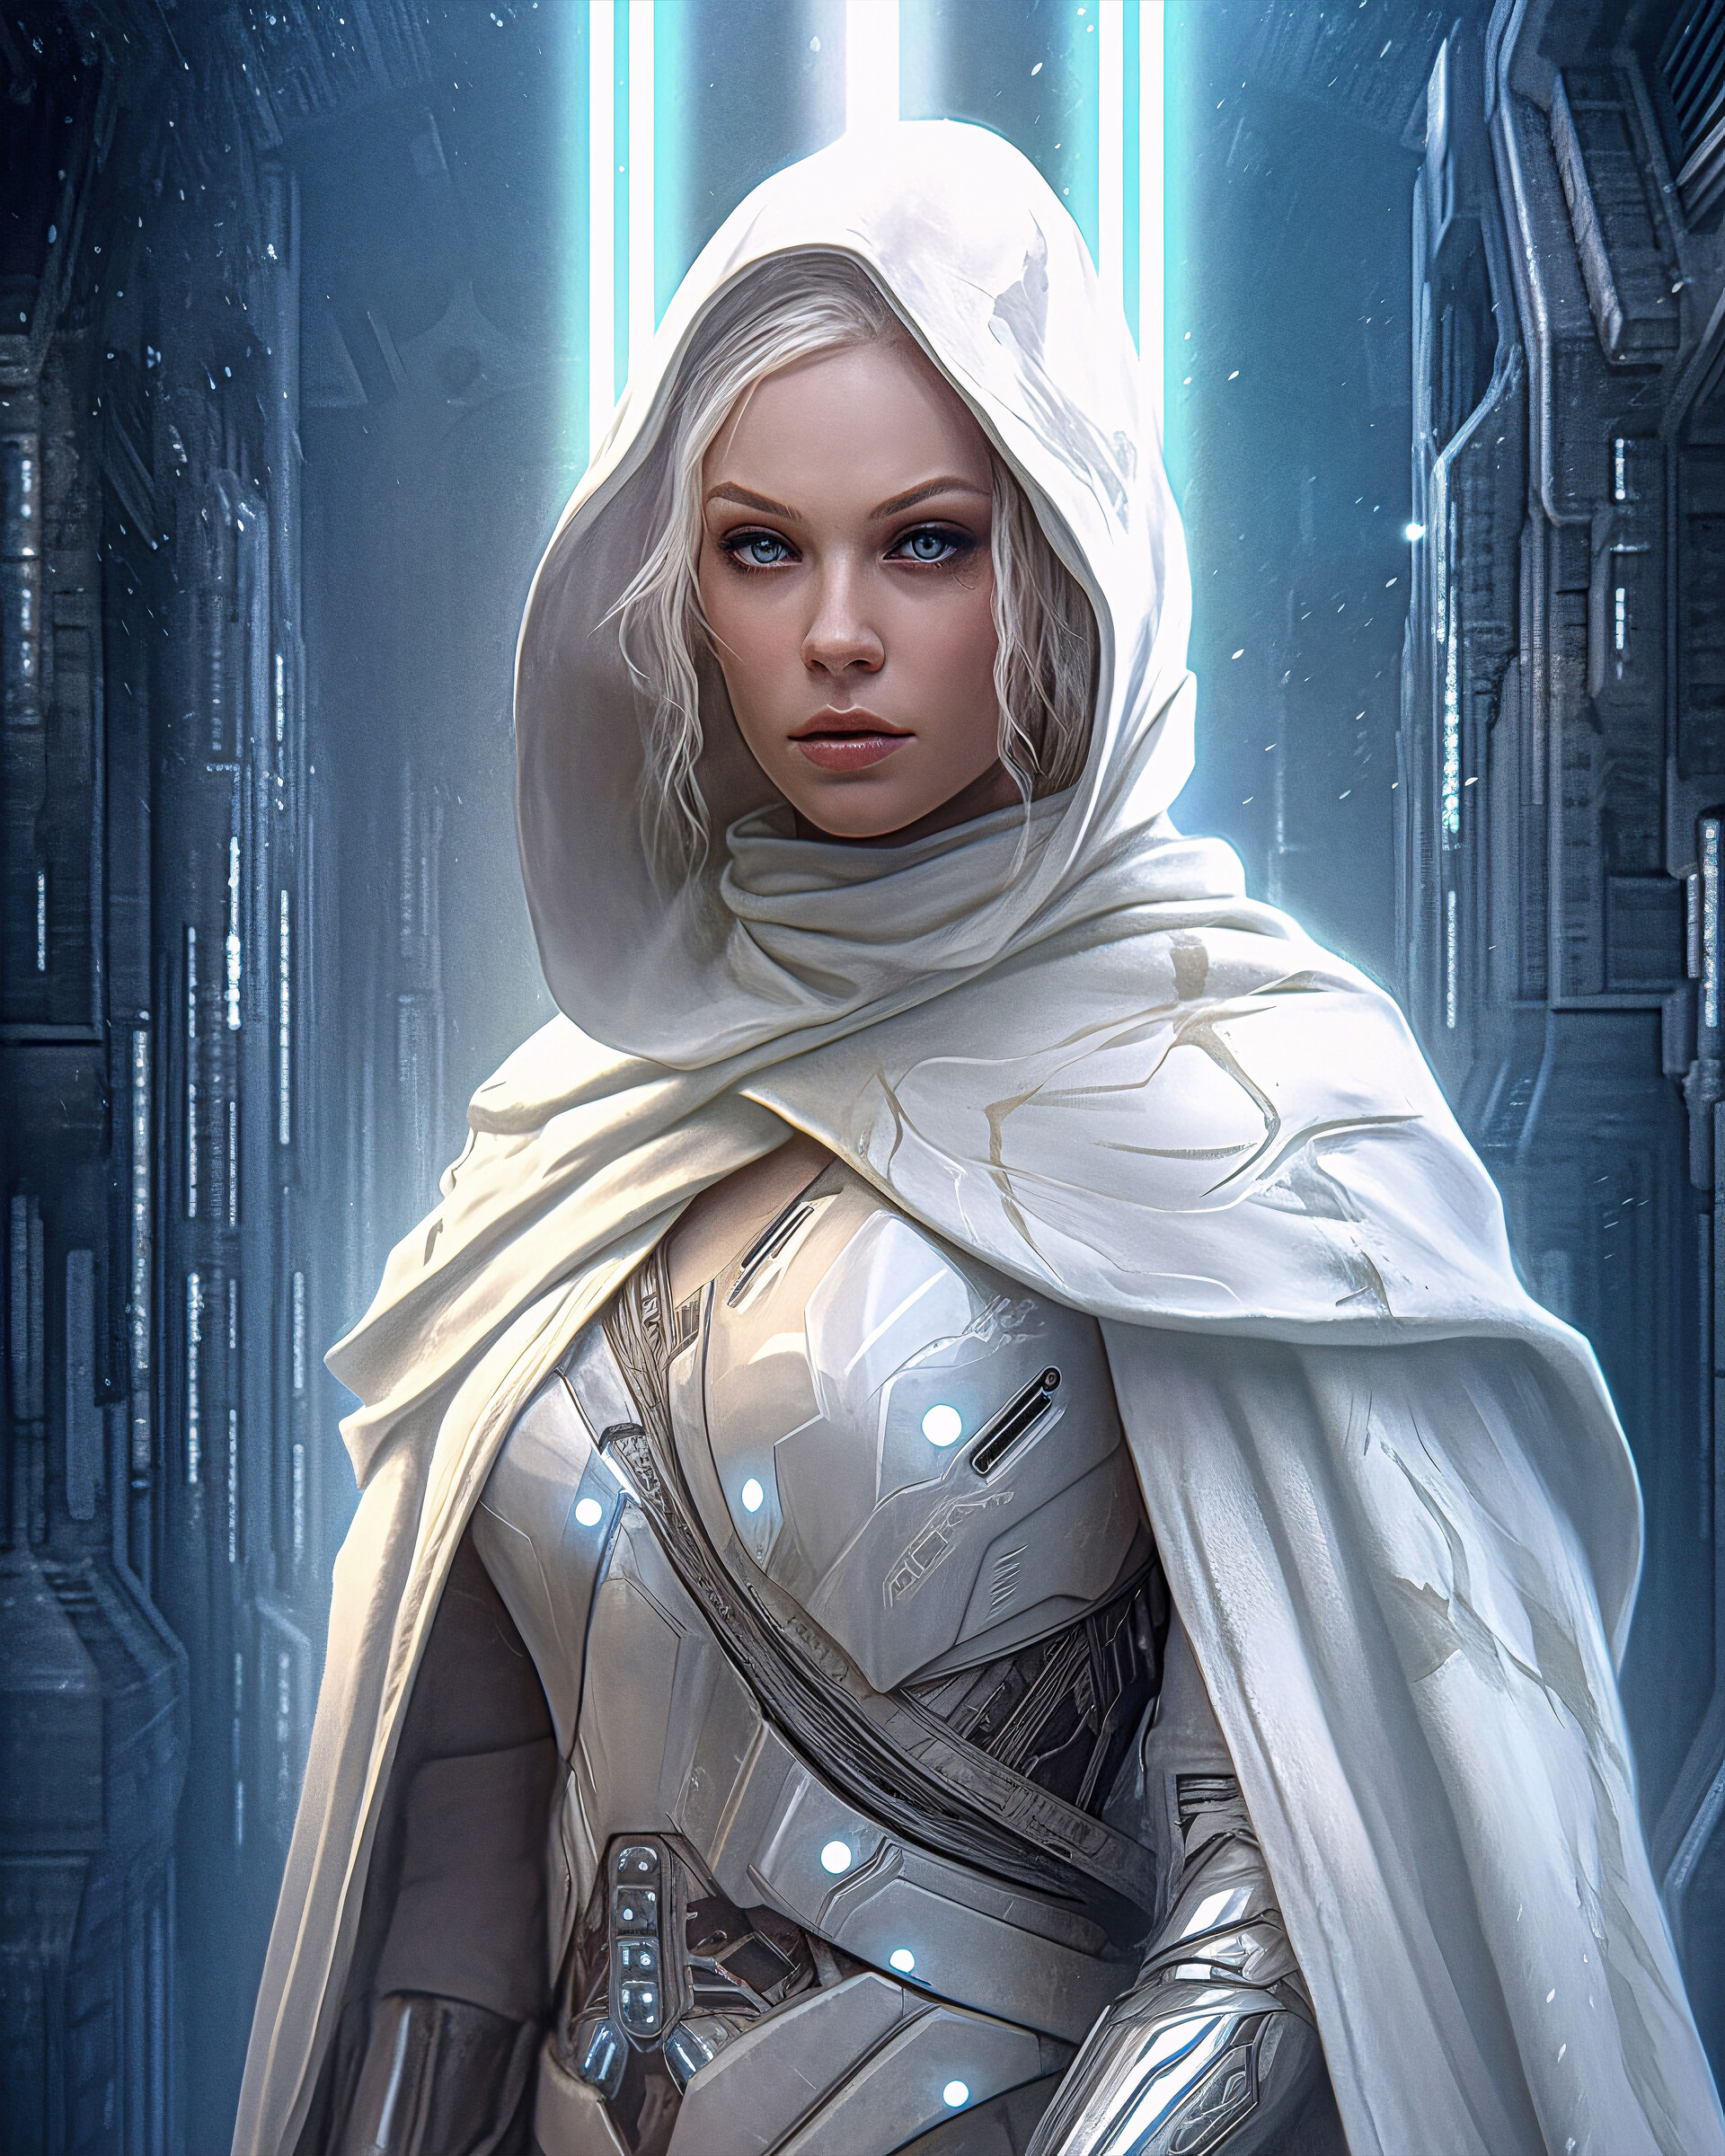 ArtStation - Star Wars Concept Female Jedis